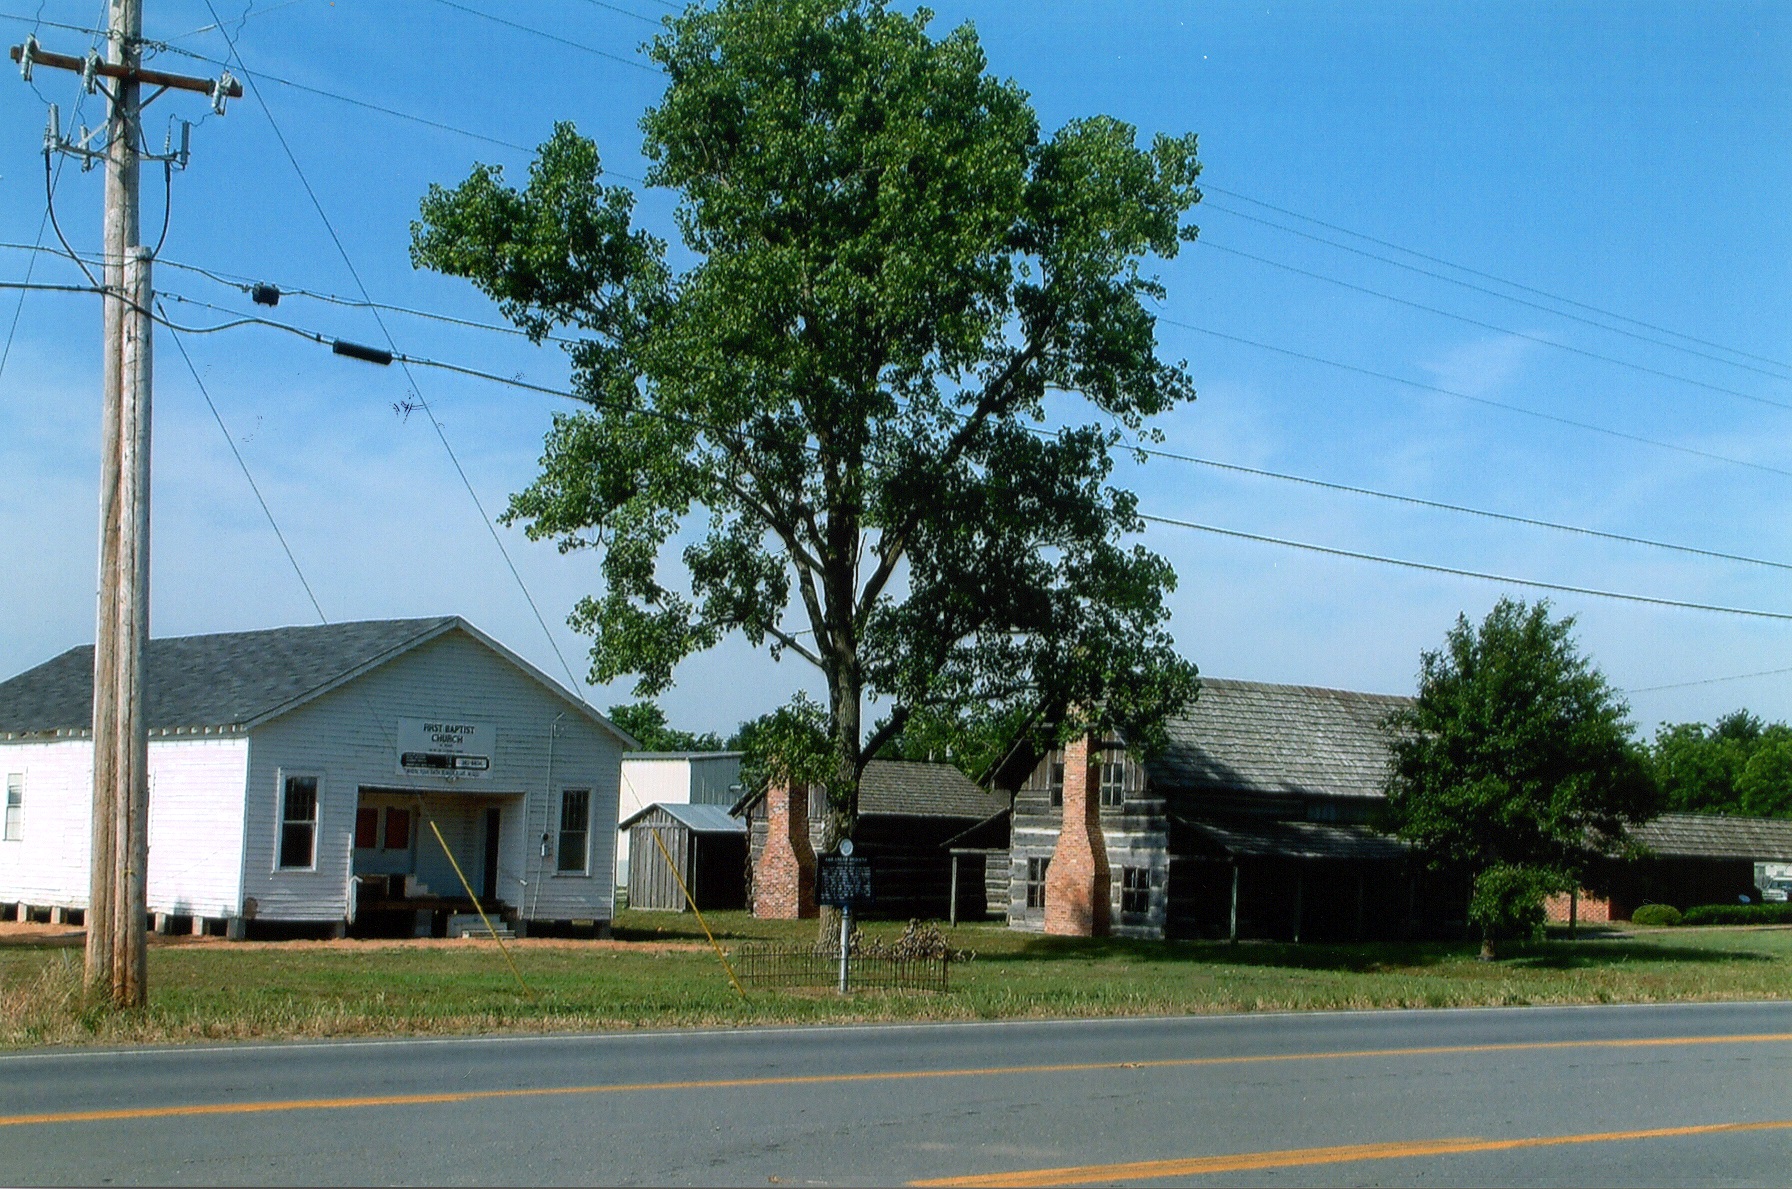 The Desha County Museum in Dumas, Arkansas